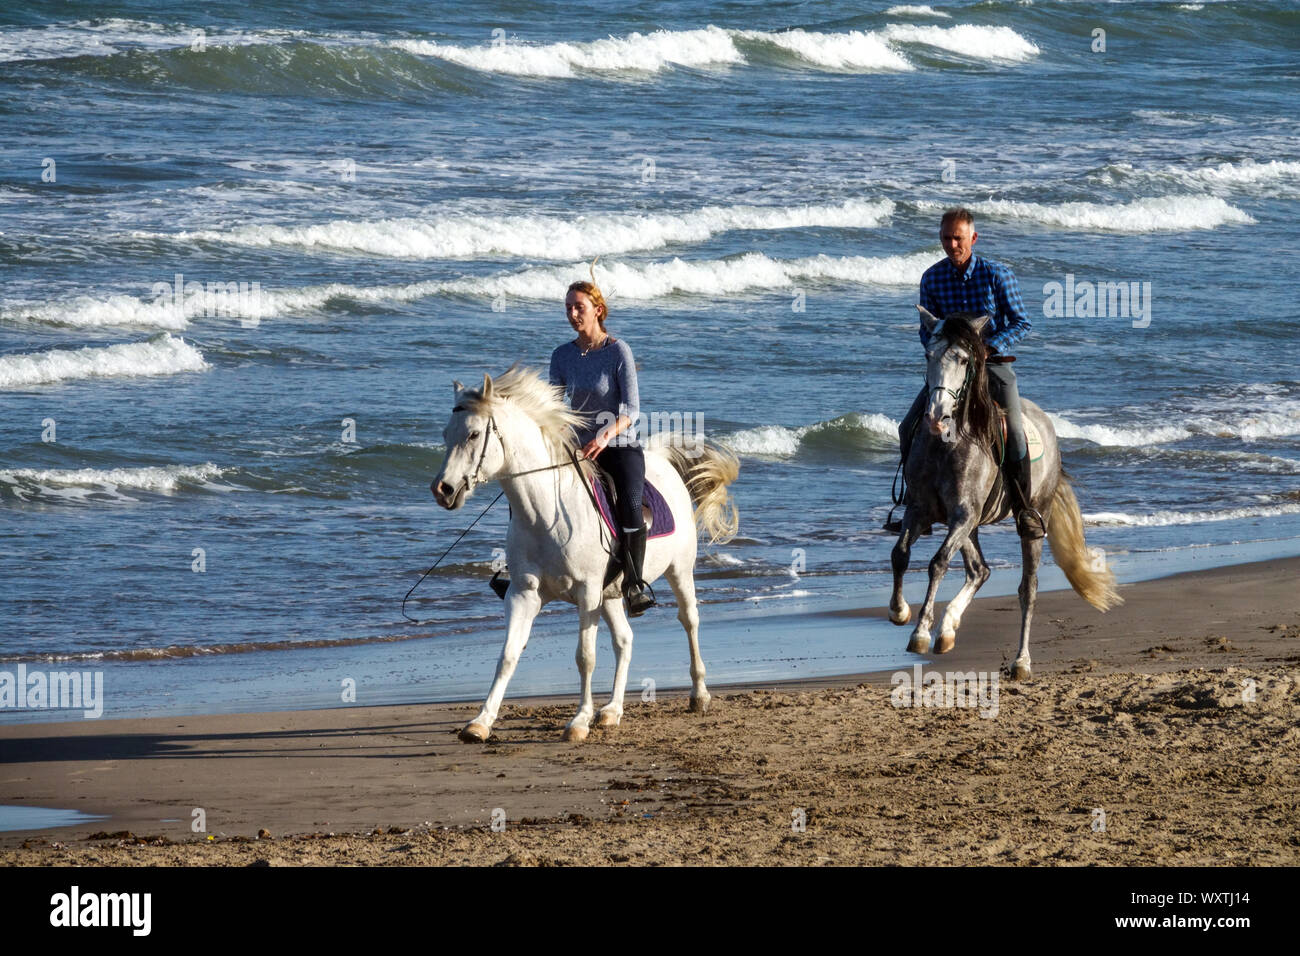 Man and woman riding horses on a beach Costa Blanca Spain Stock Photo